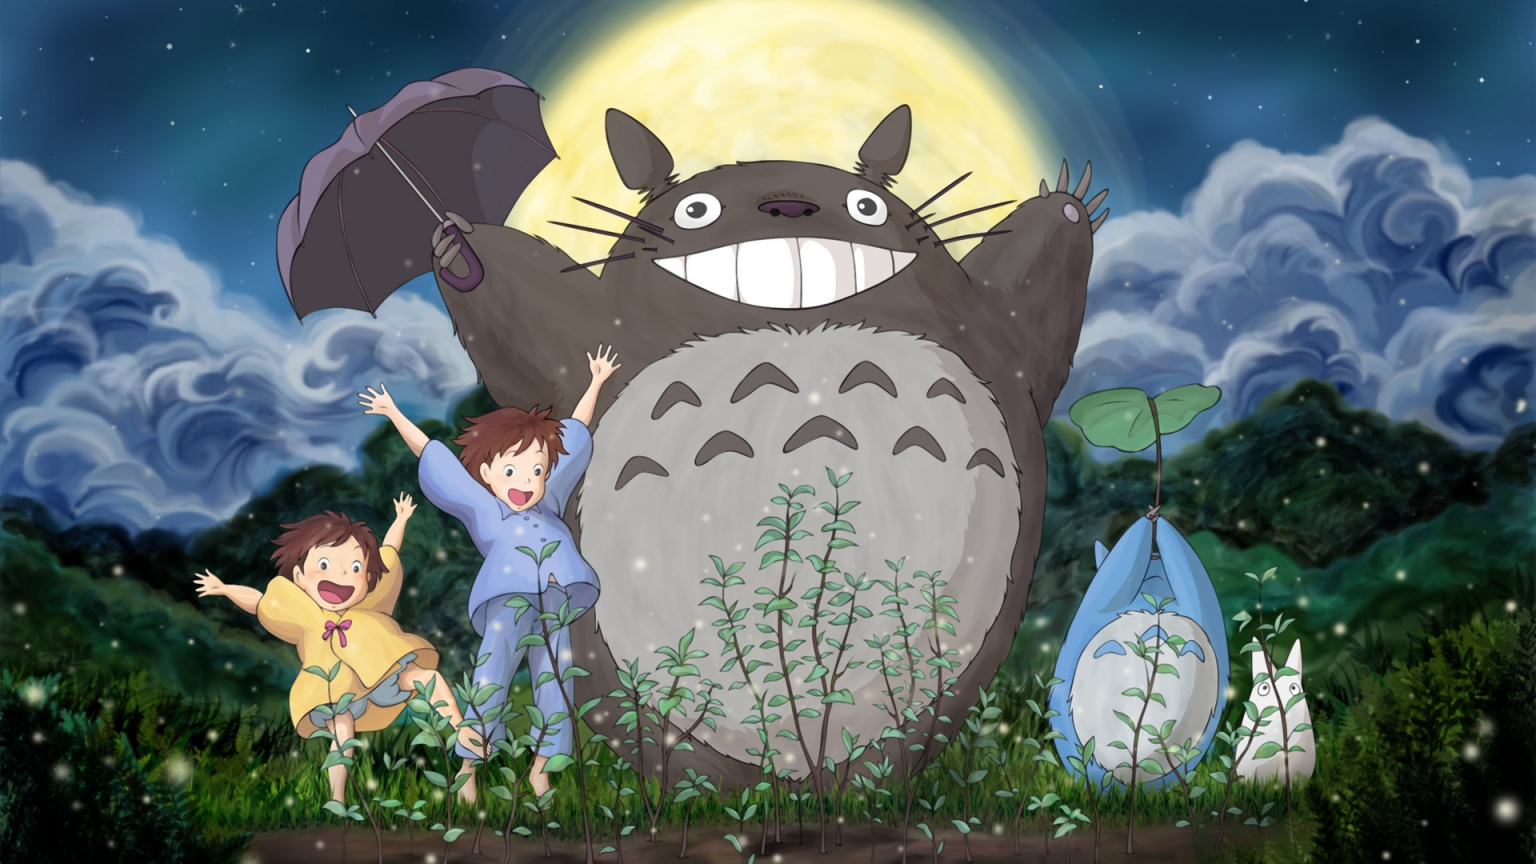 My Neighbor Totoro Movie for 1536 x 864 HDTV resolution